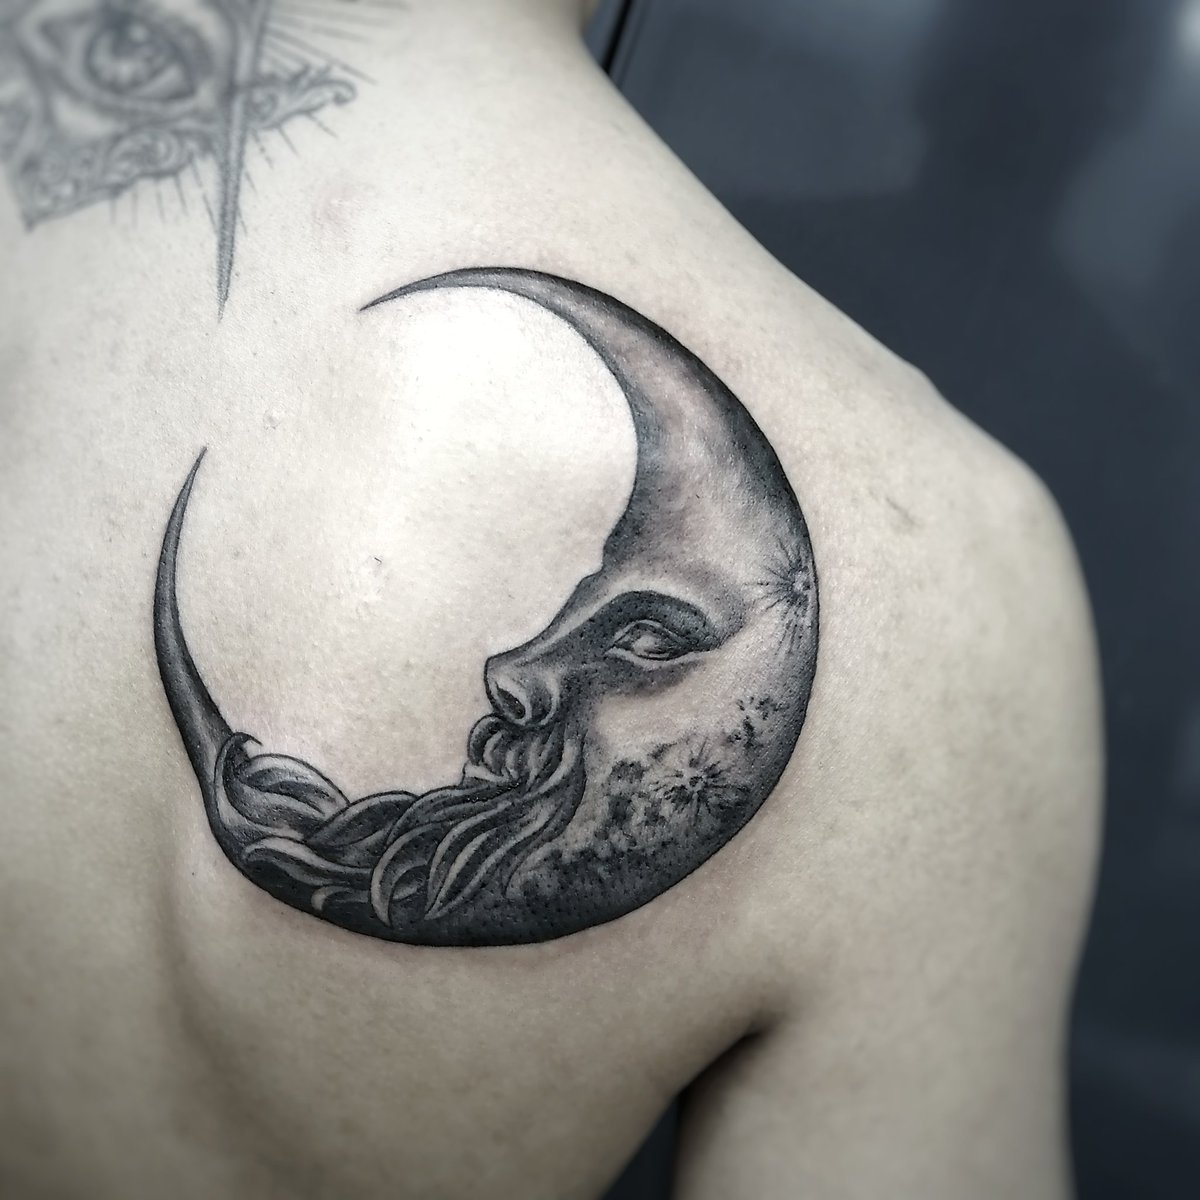 Fanatic Tattoo Ririka彫師 タトゥー 肩甲骨にお月さま こんなデザインをご希望の方は是非ririkaまでご連絡くださいませ これは持ち込みデザインのアレンジverです タトゥー 月のタトゥー Moon 宗教っぽい ギリシャ神話 好きなやつ タトゥー